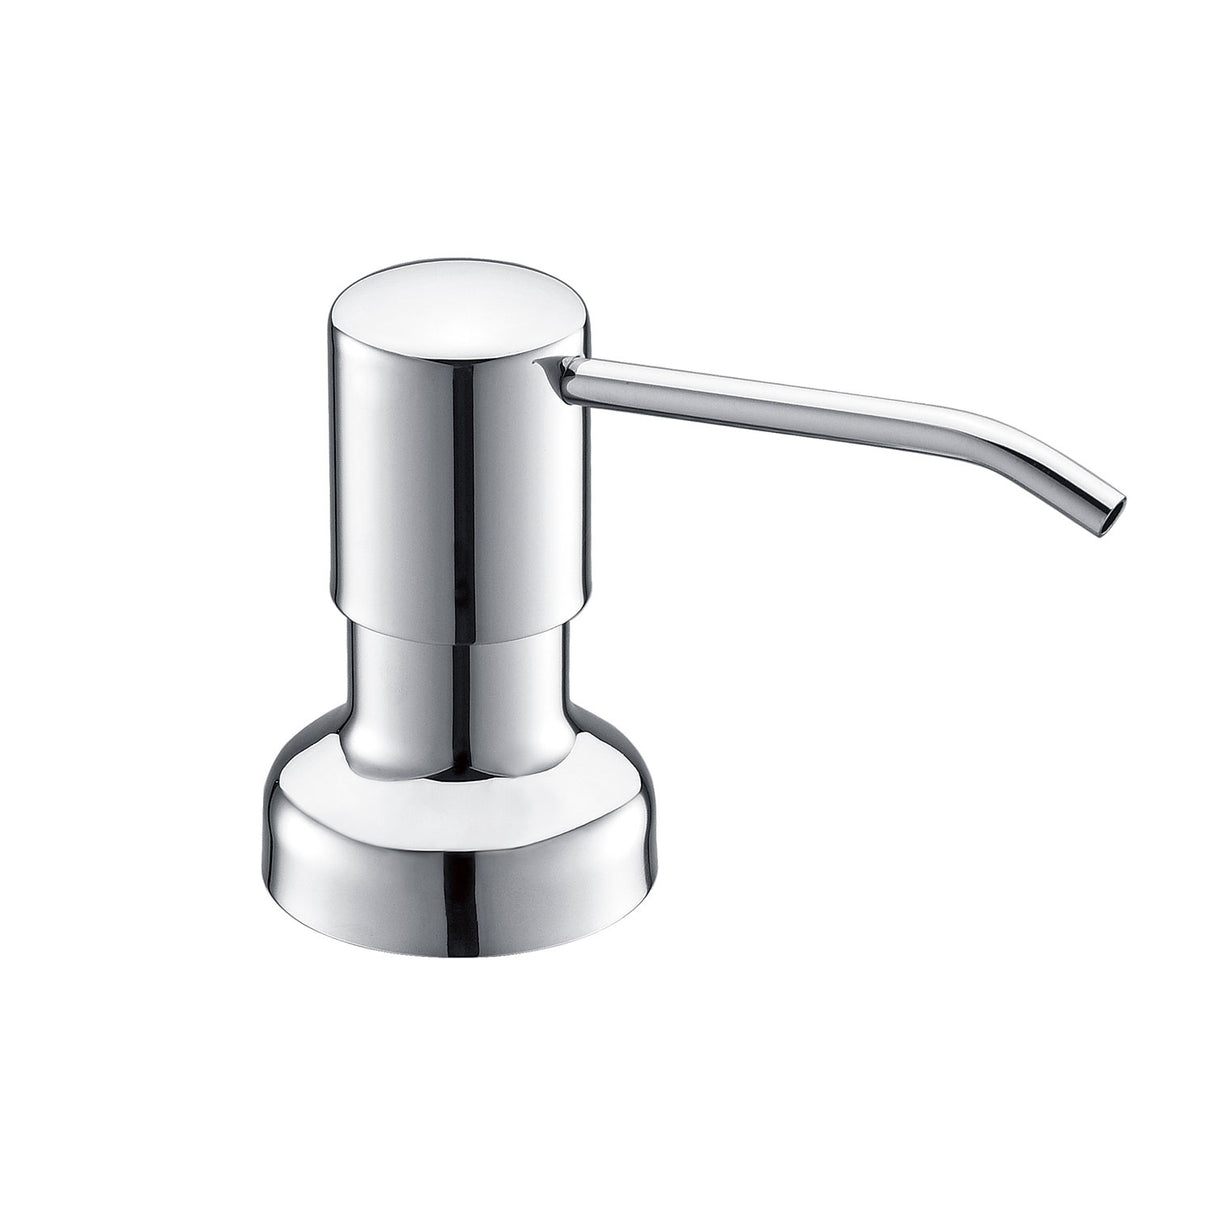 DAX Brass Round Soap Dispenser, Chrome DAX-1002-CR